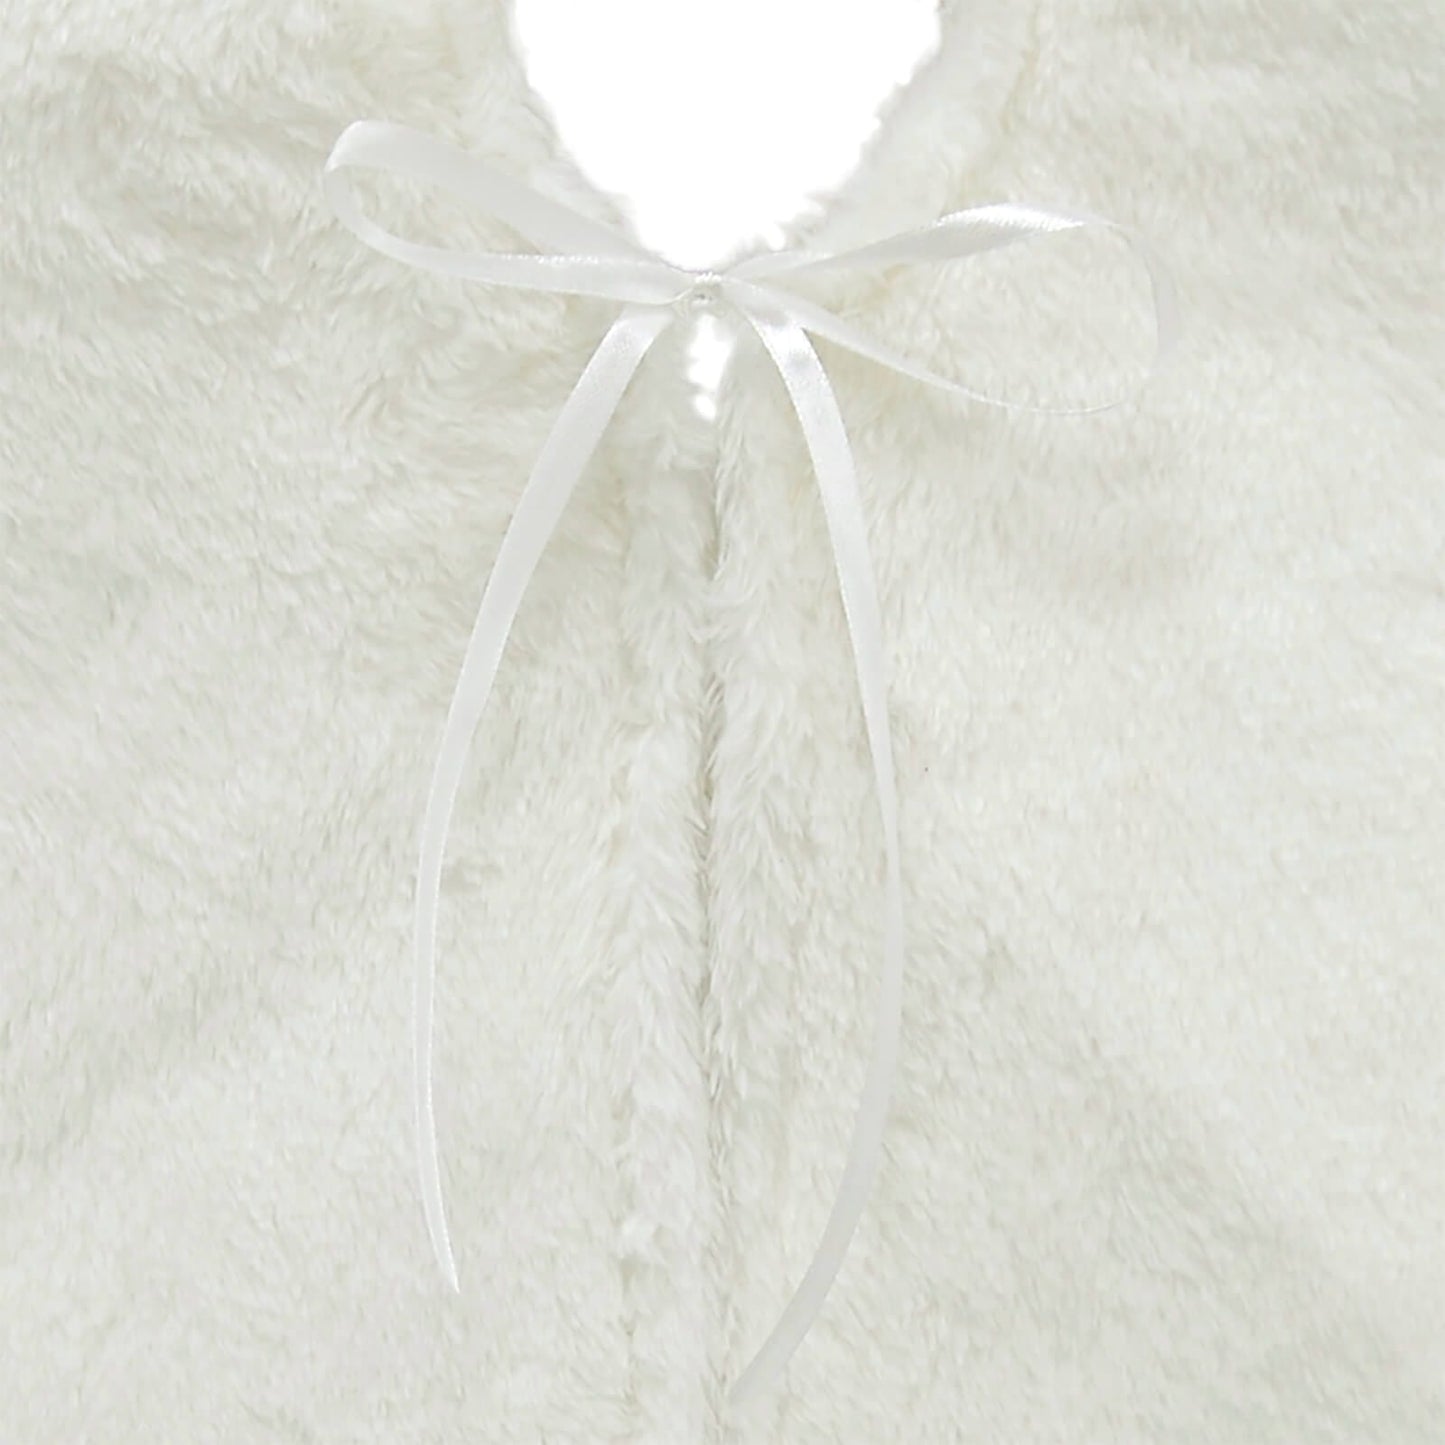 Mr Crimbo Christmas Tree Skirt Faux Fur Fabric Collar Decoration 1m